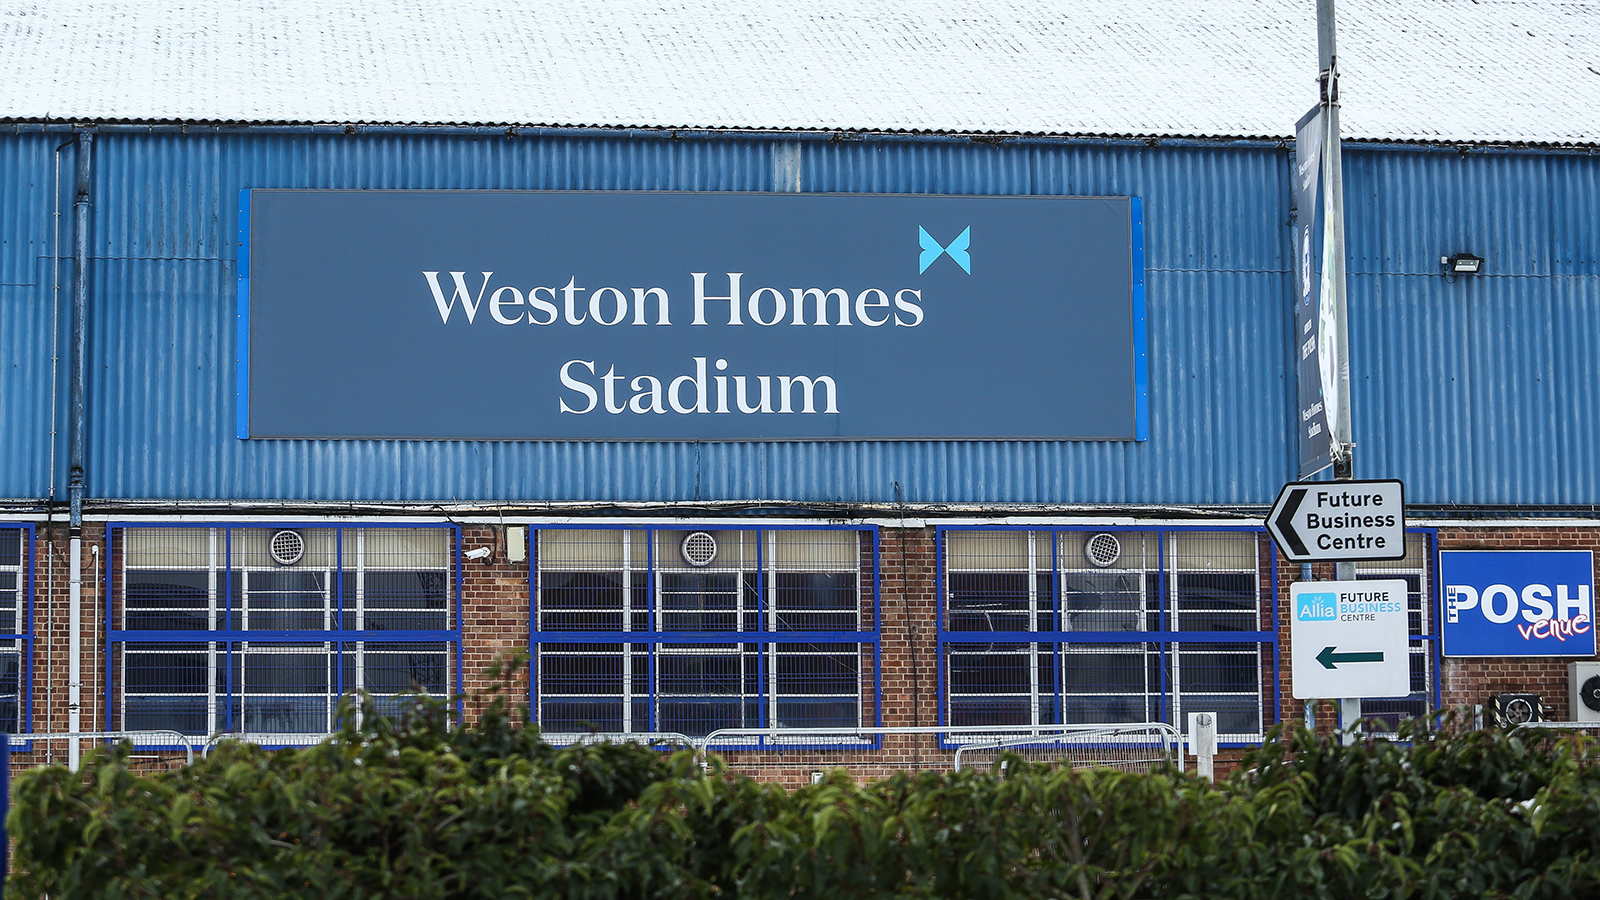 Weston Homes Stadium